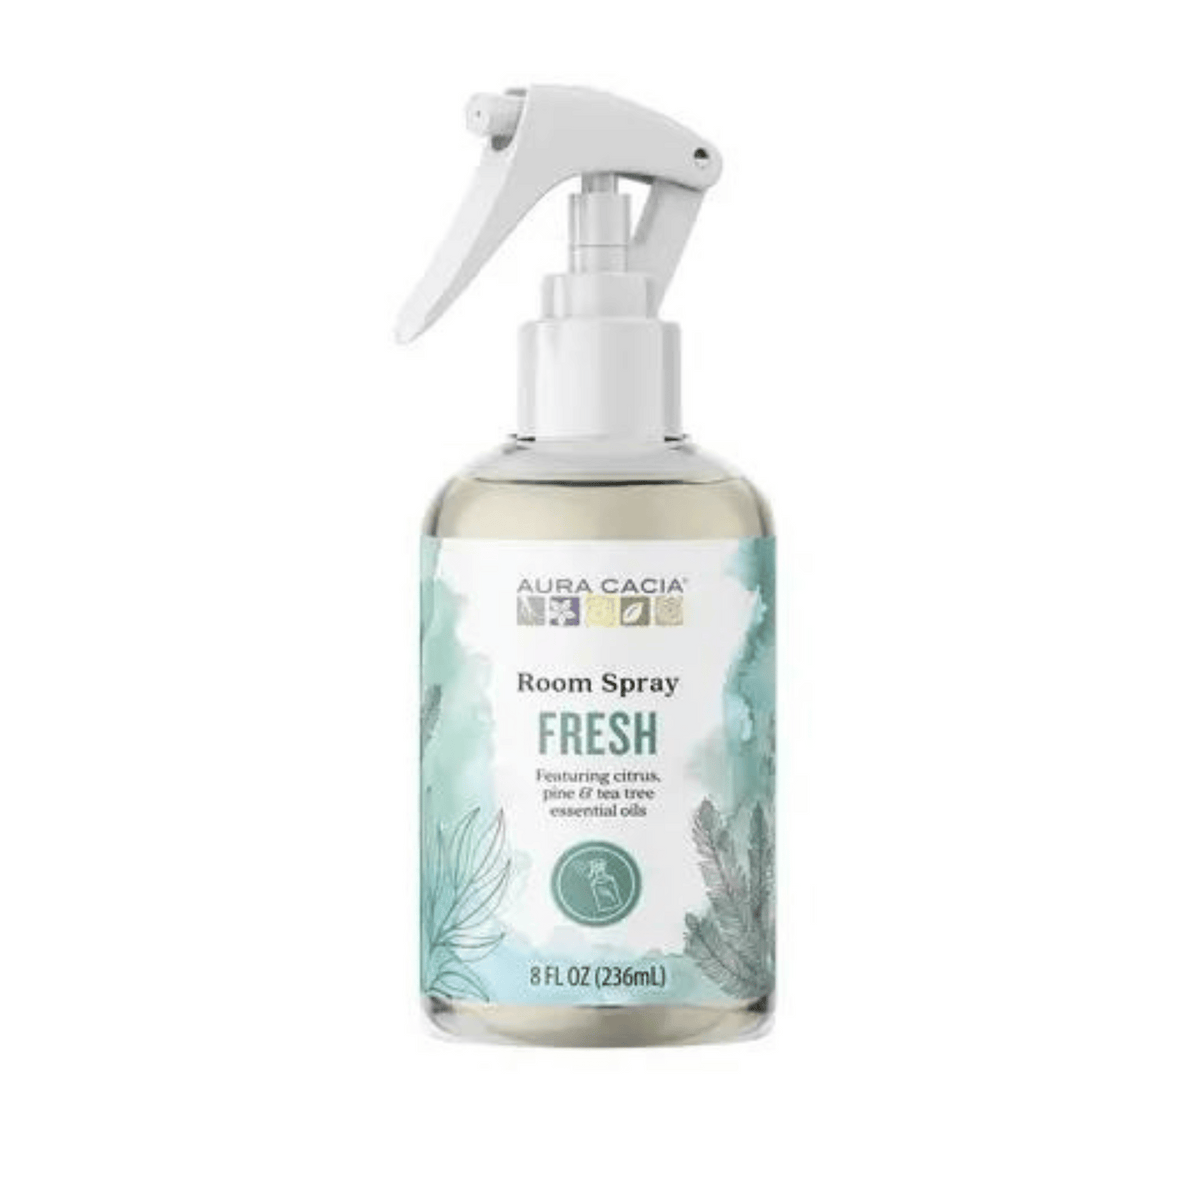 Primary Image of  Room Spray - Fresh